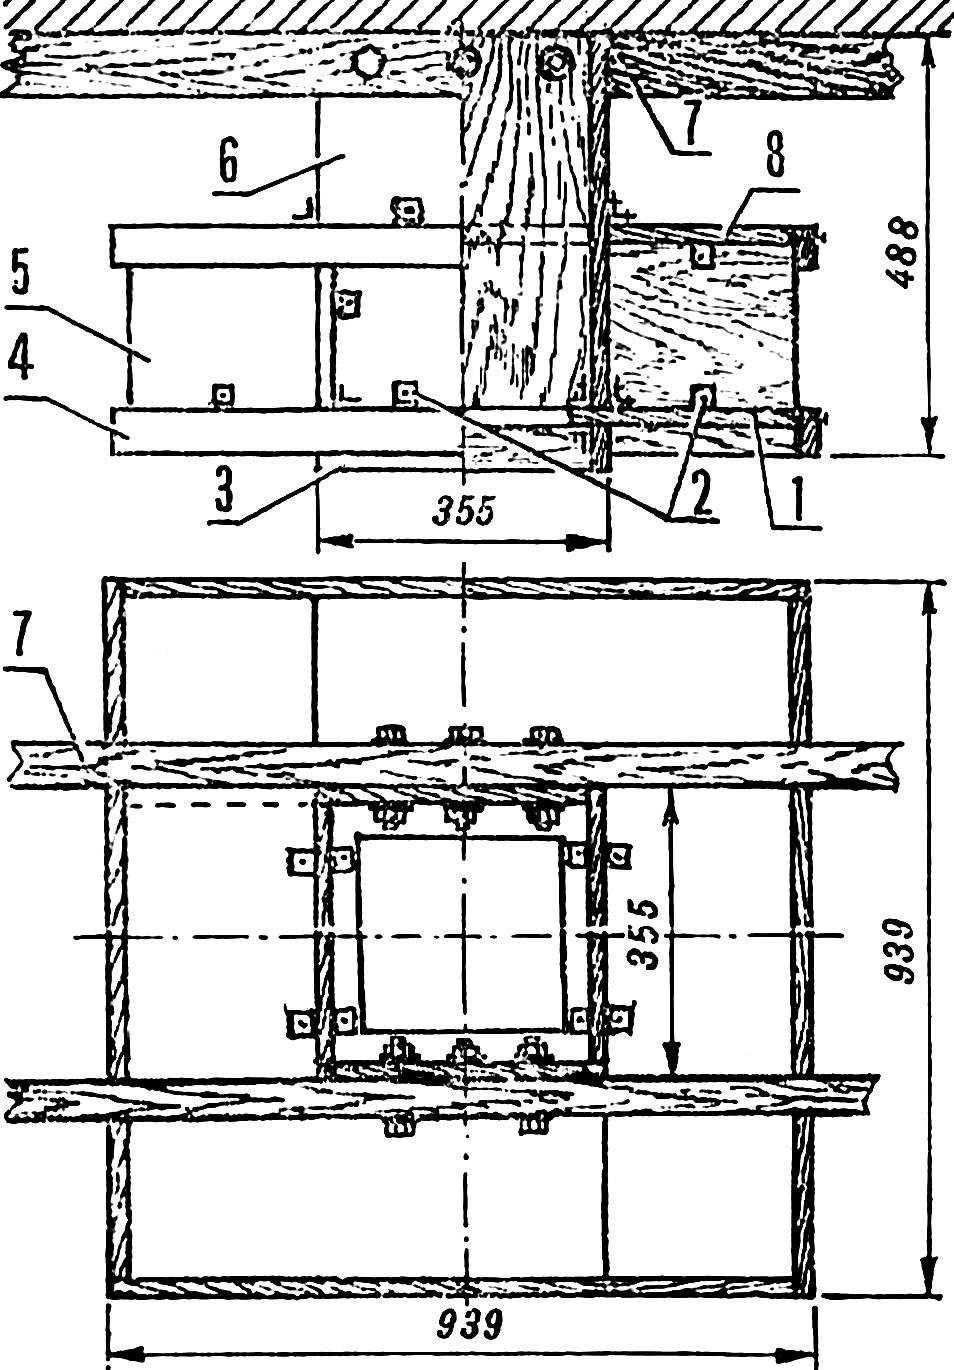 Fig. 1. Ceiling mezzanine.